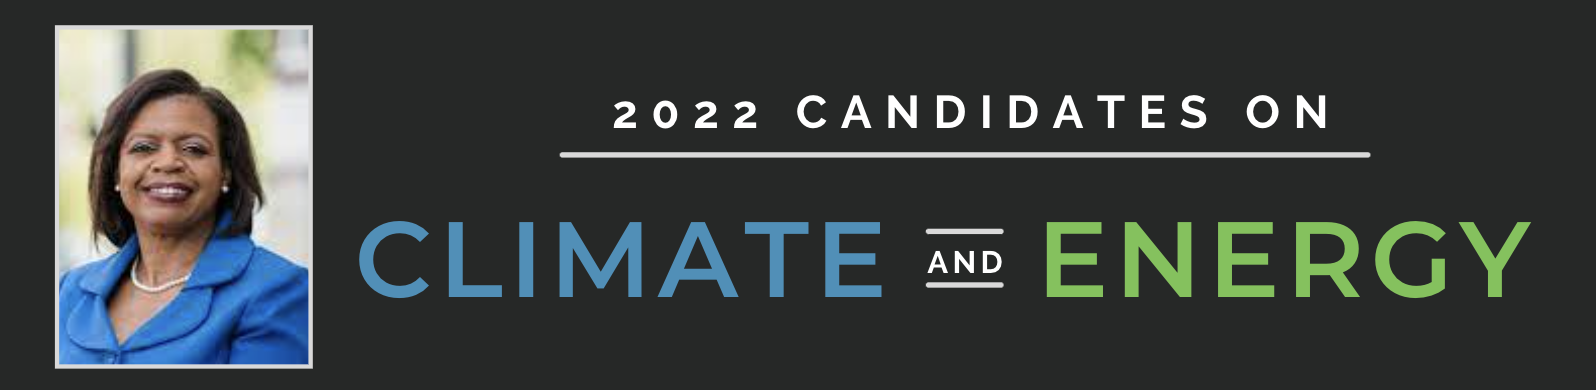 Where the Candidates Stand On Energy: Democratic Nominee for U.S. Senate in North Carolina, Cheri Beasley